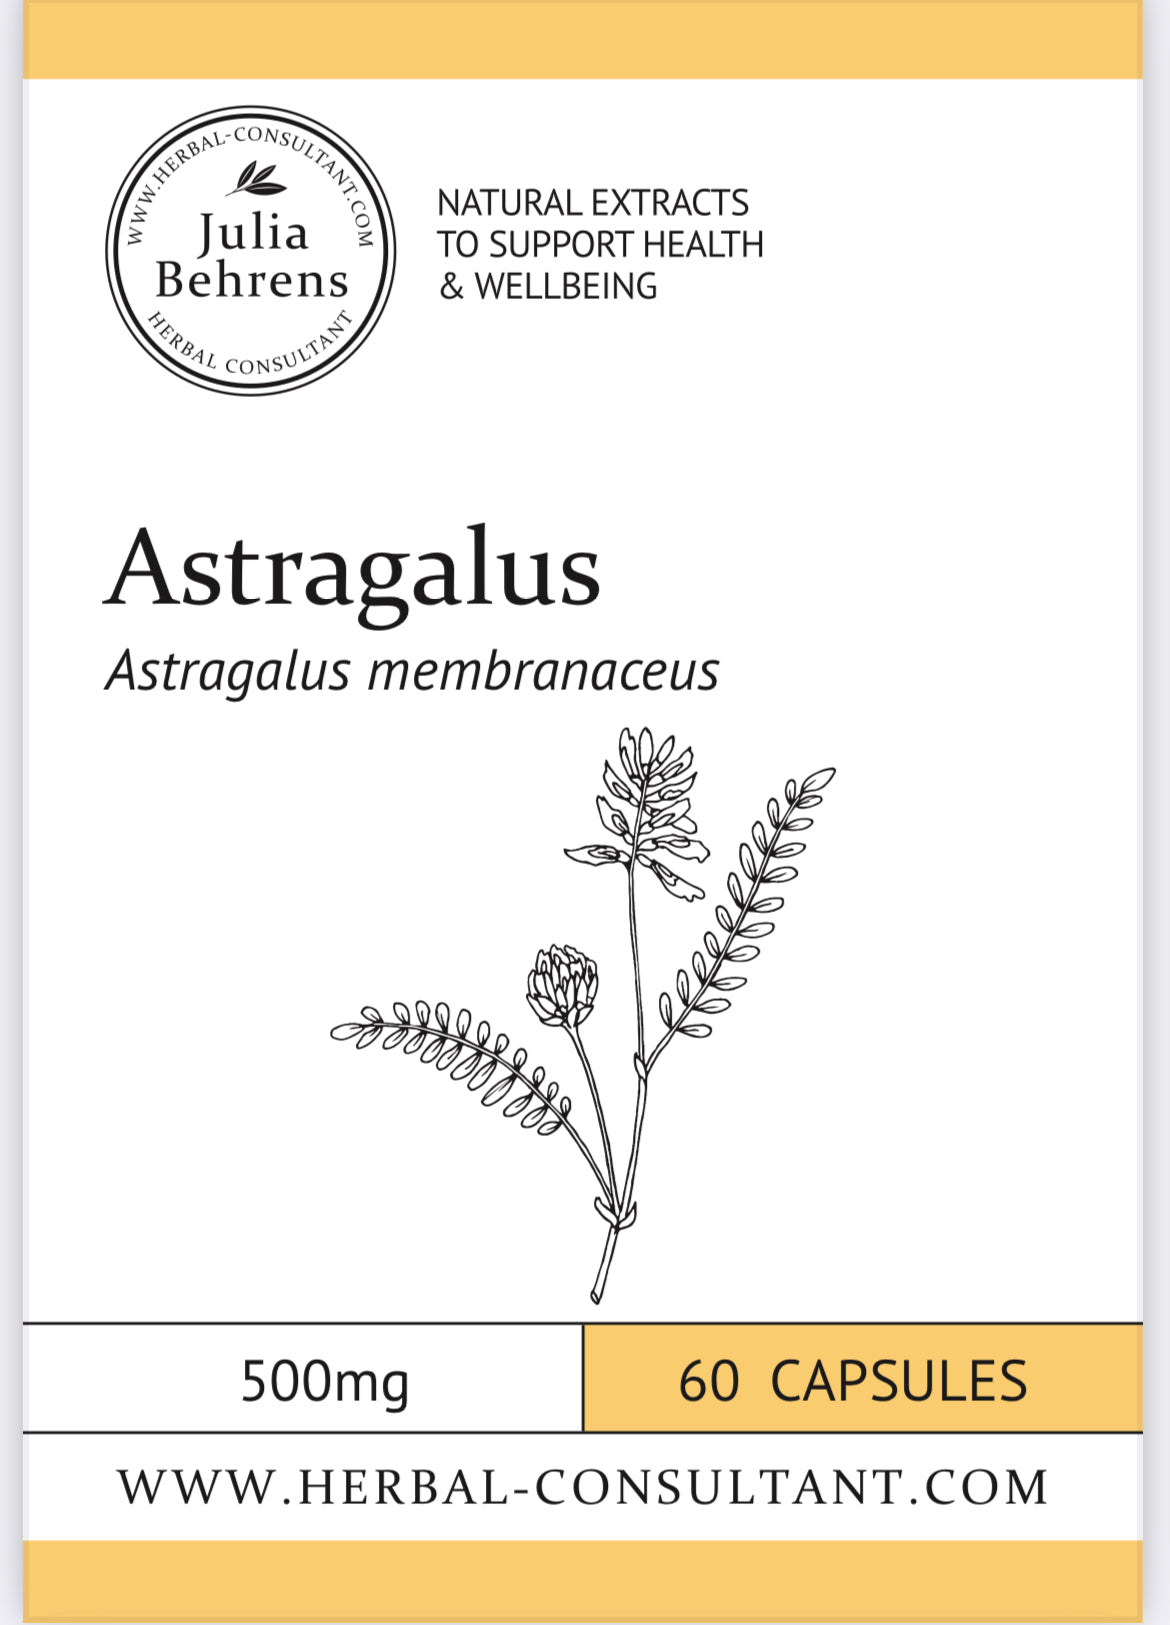 Astragulus capsules  by Julia Behrens